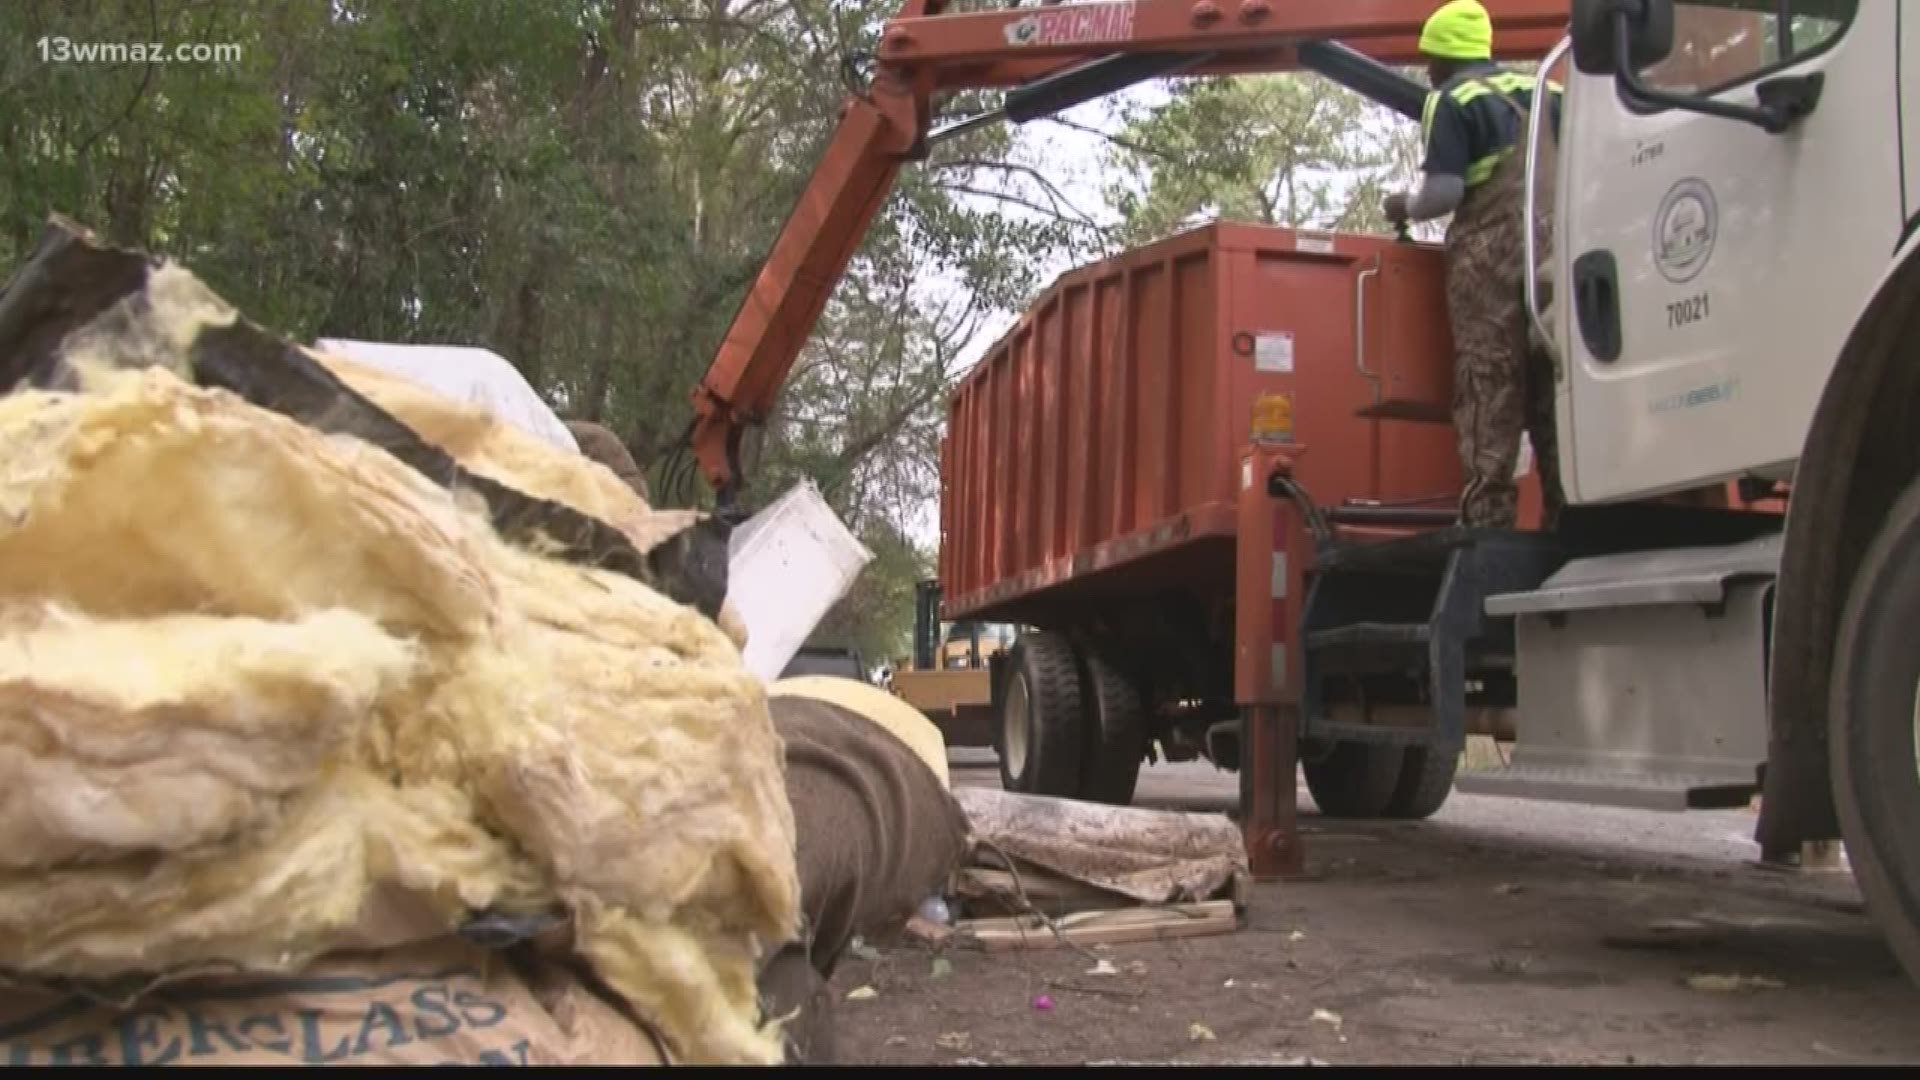 Bulky Item Pick-Ups/ Illegal Dumping